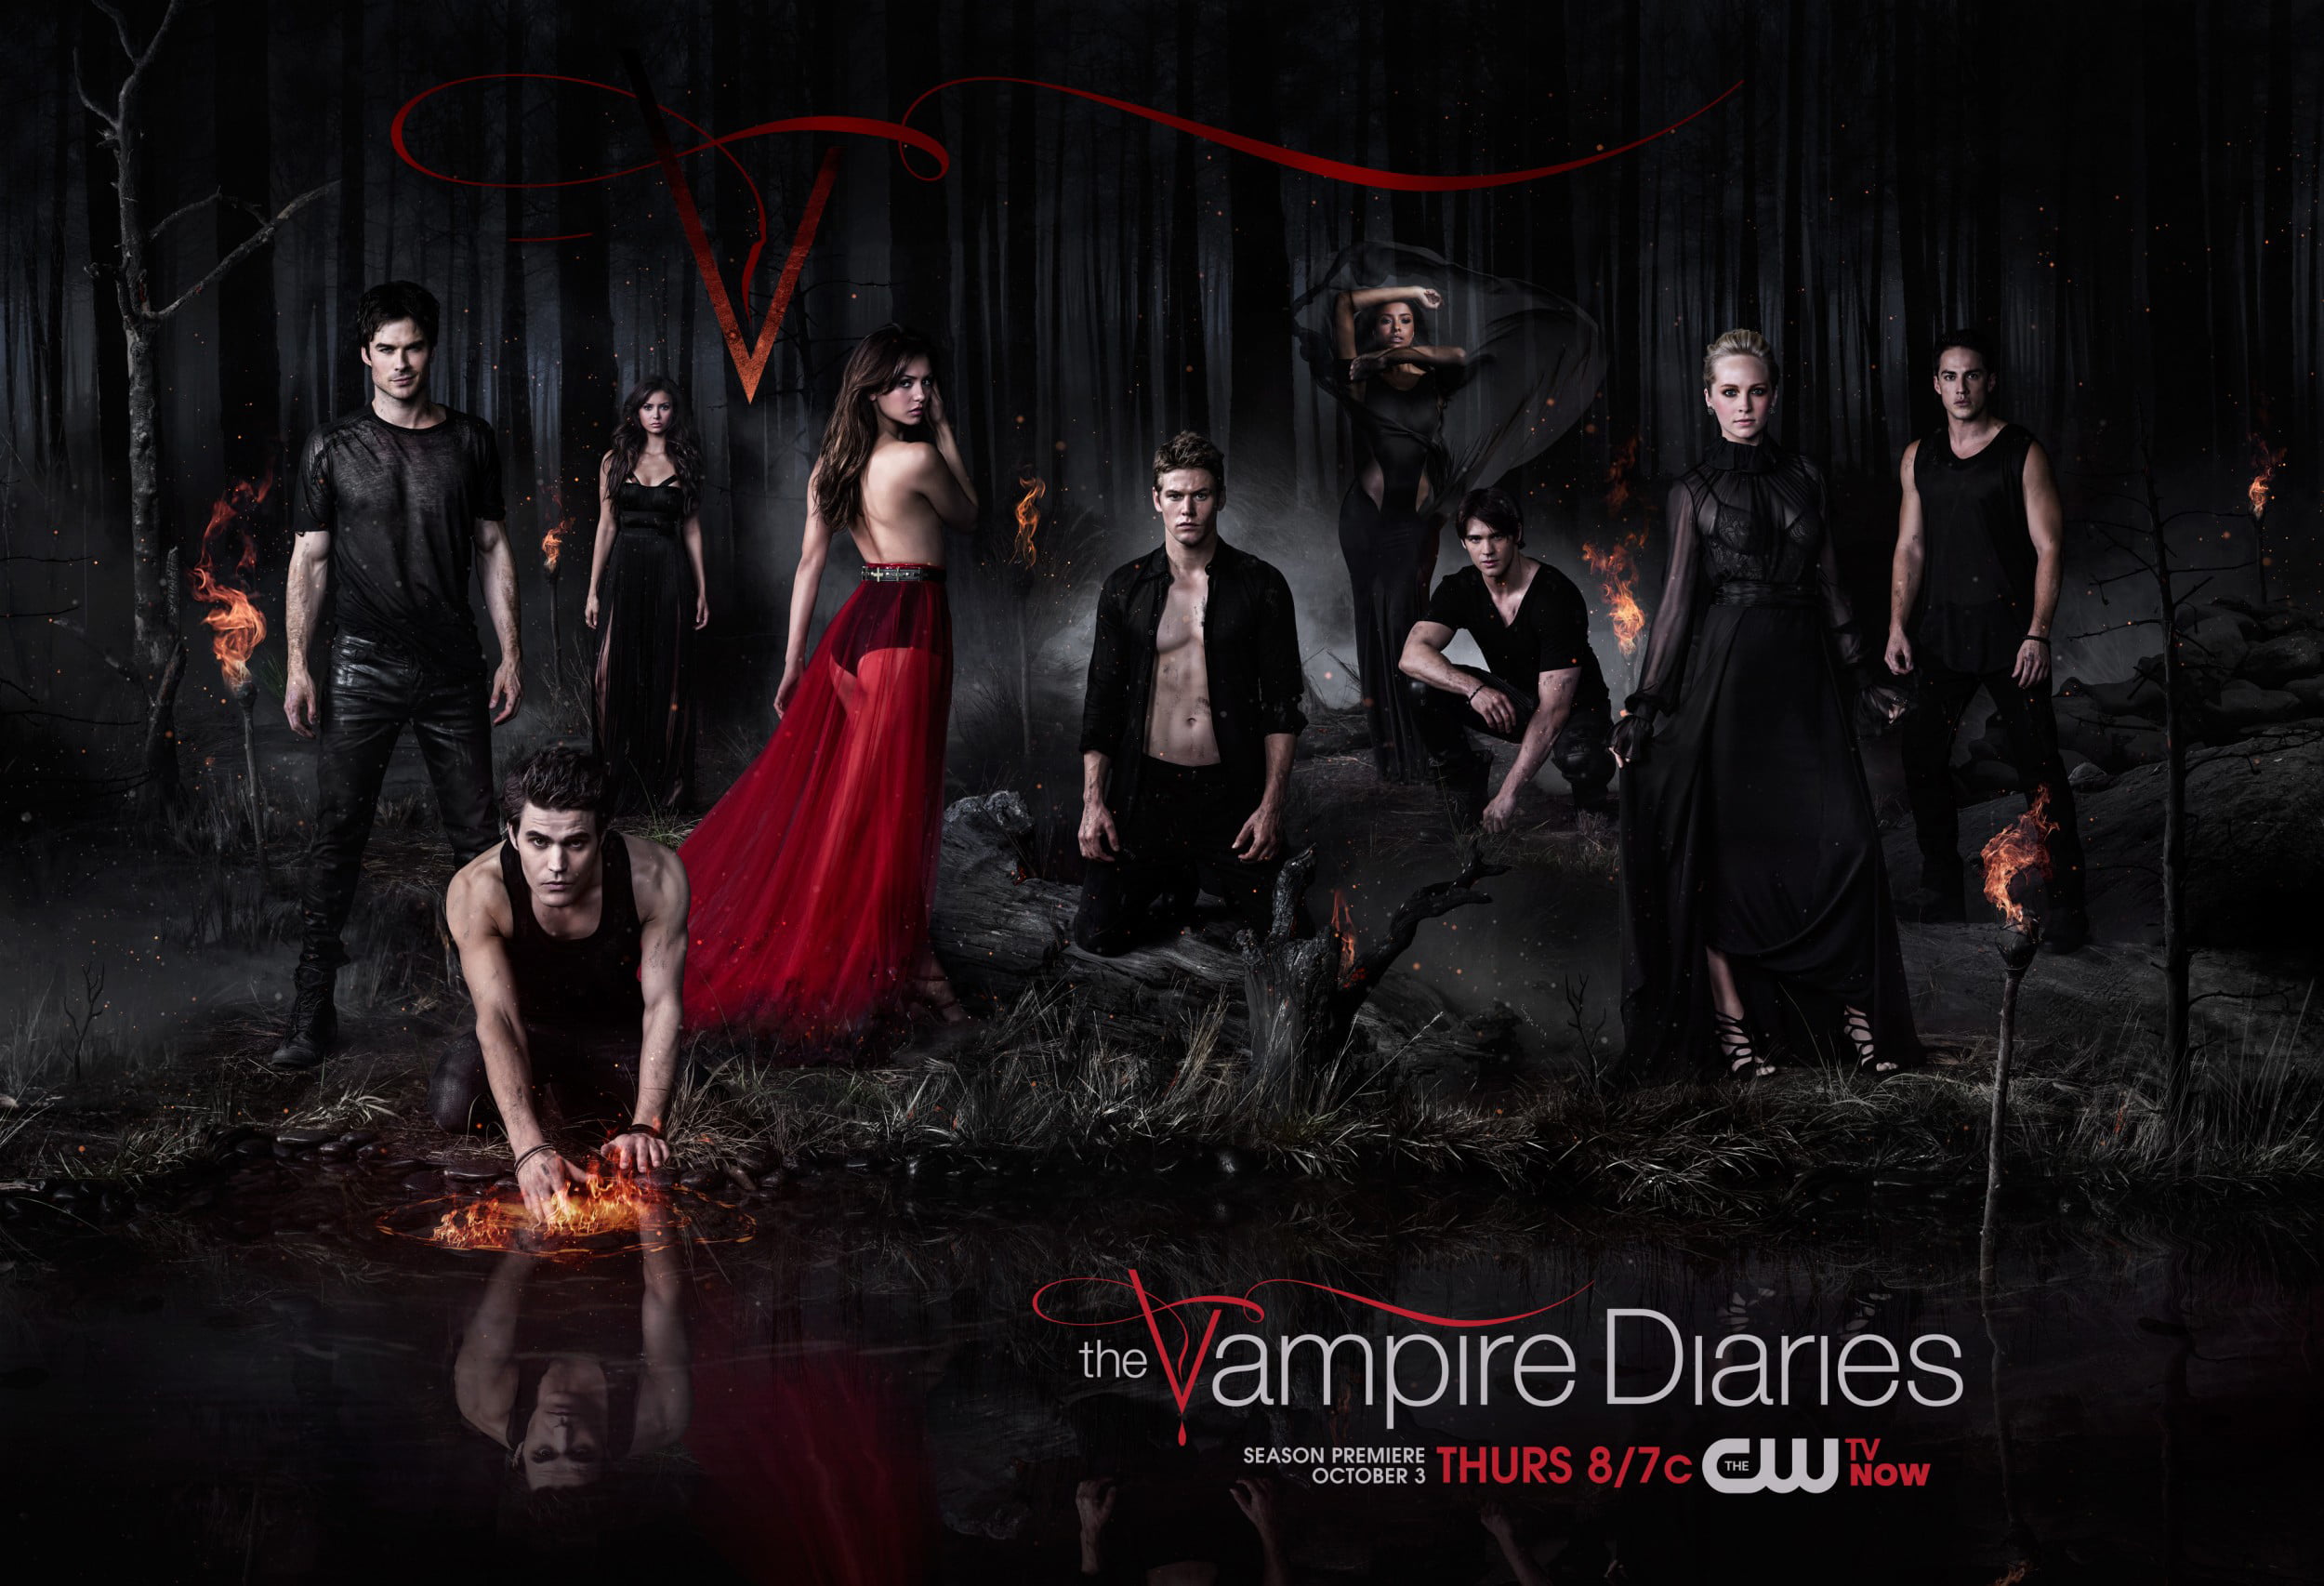 The Vampire Diaries digital wallpaper, Nina Dobrev, Paul Wesley